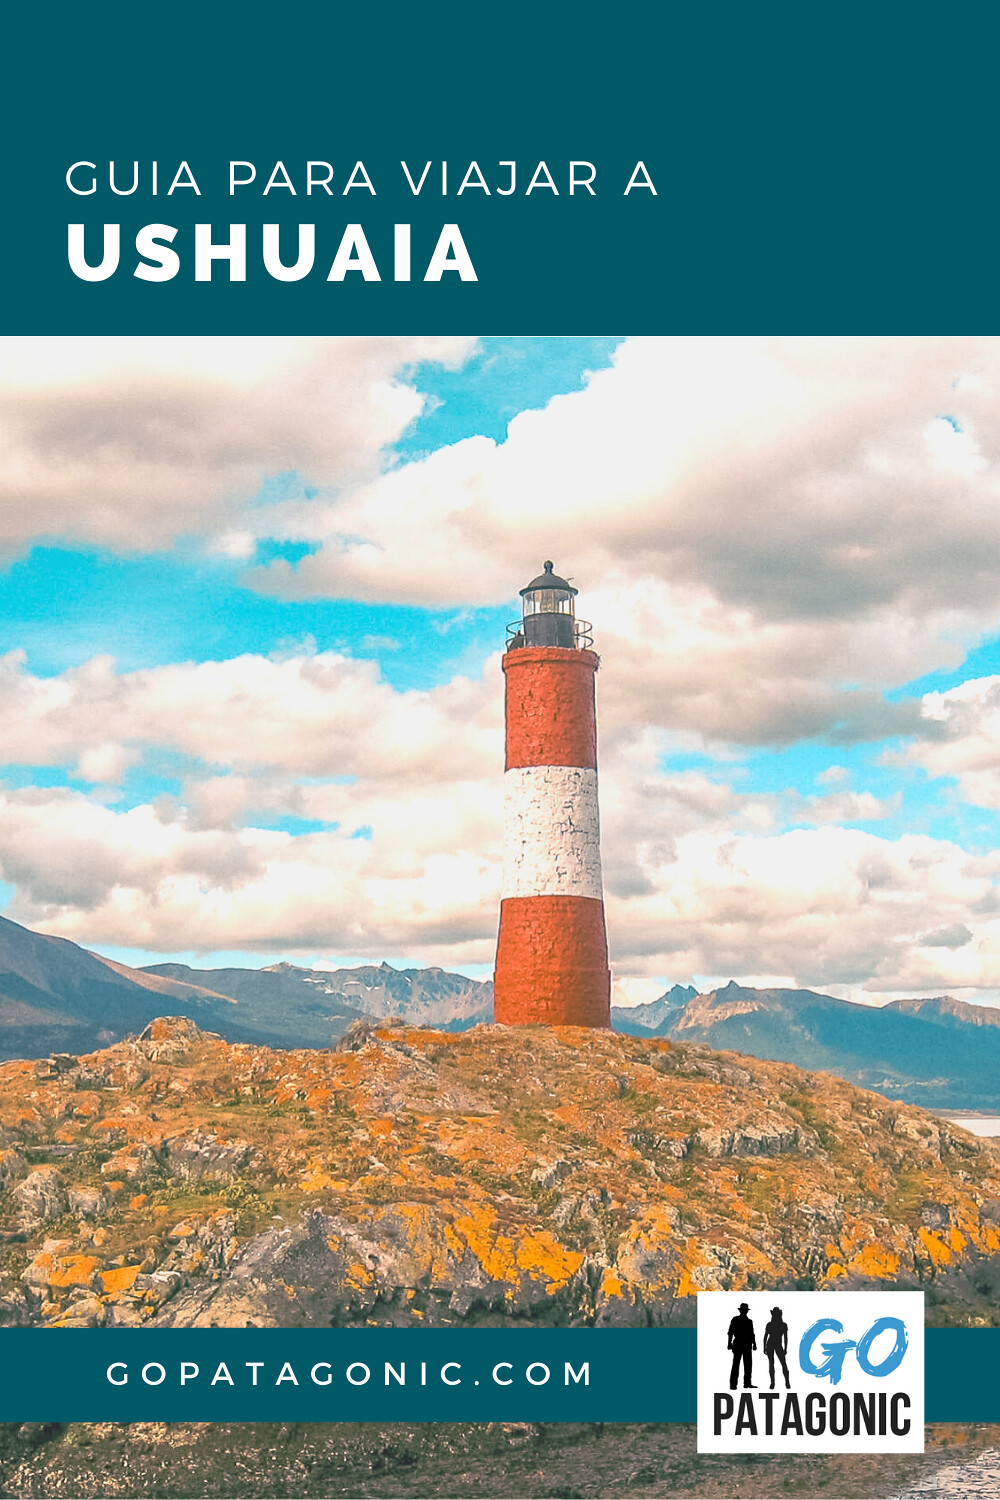 Viajar a Ushuaia, guia